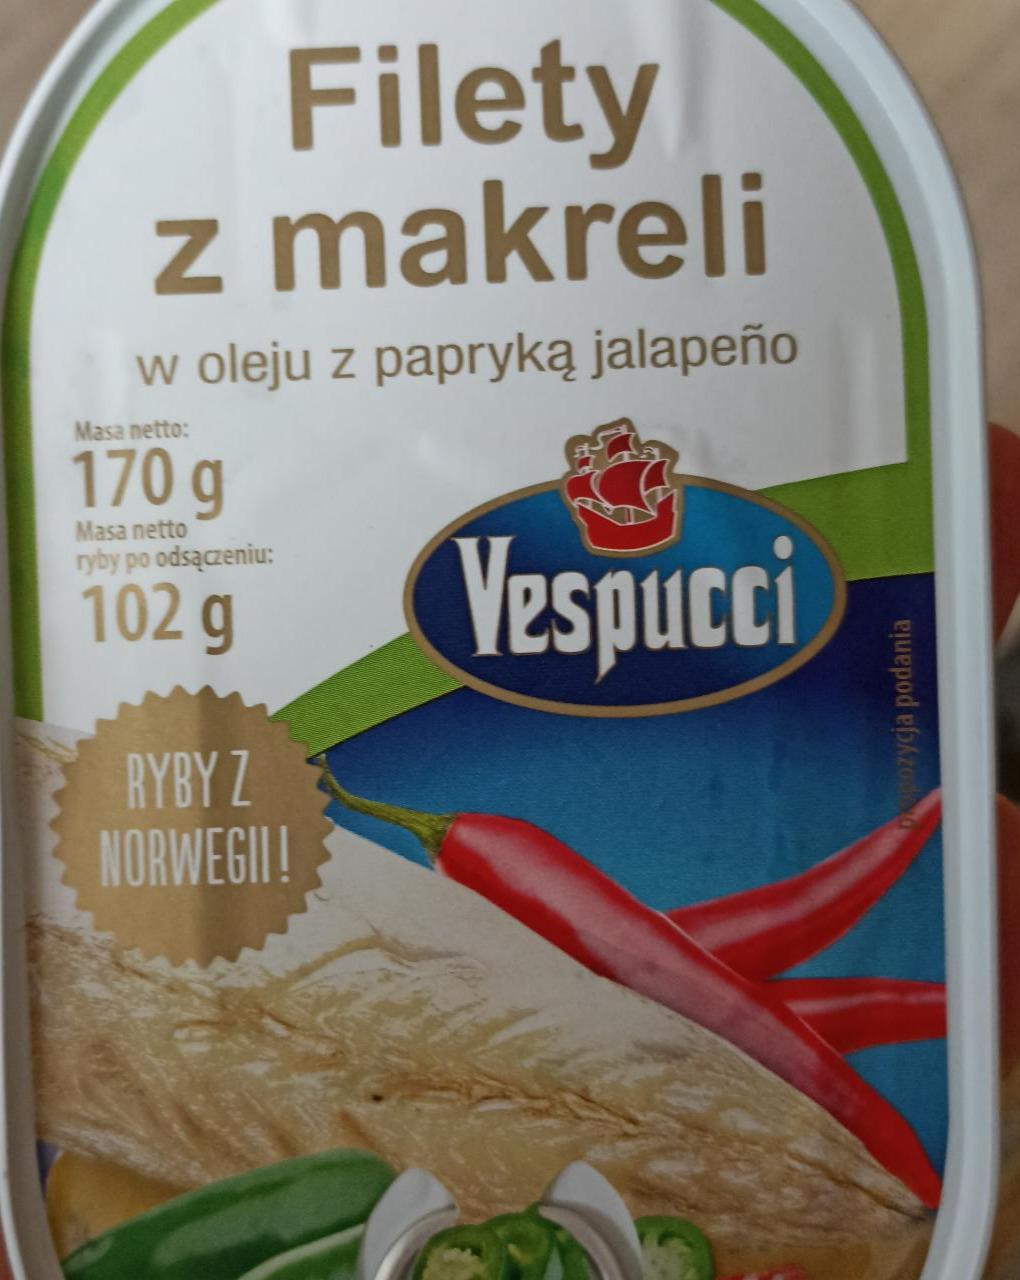 Zdjęcia - Filety z makreli w oleju z papryką jalapeño Vespucci